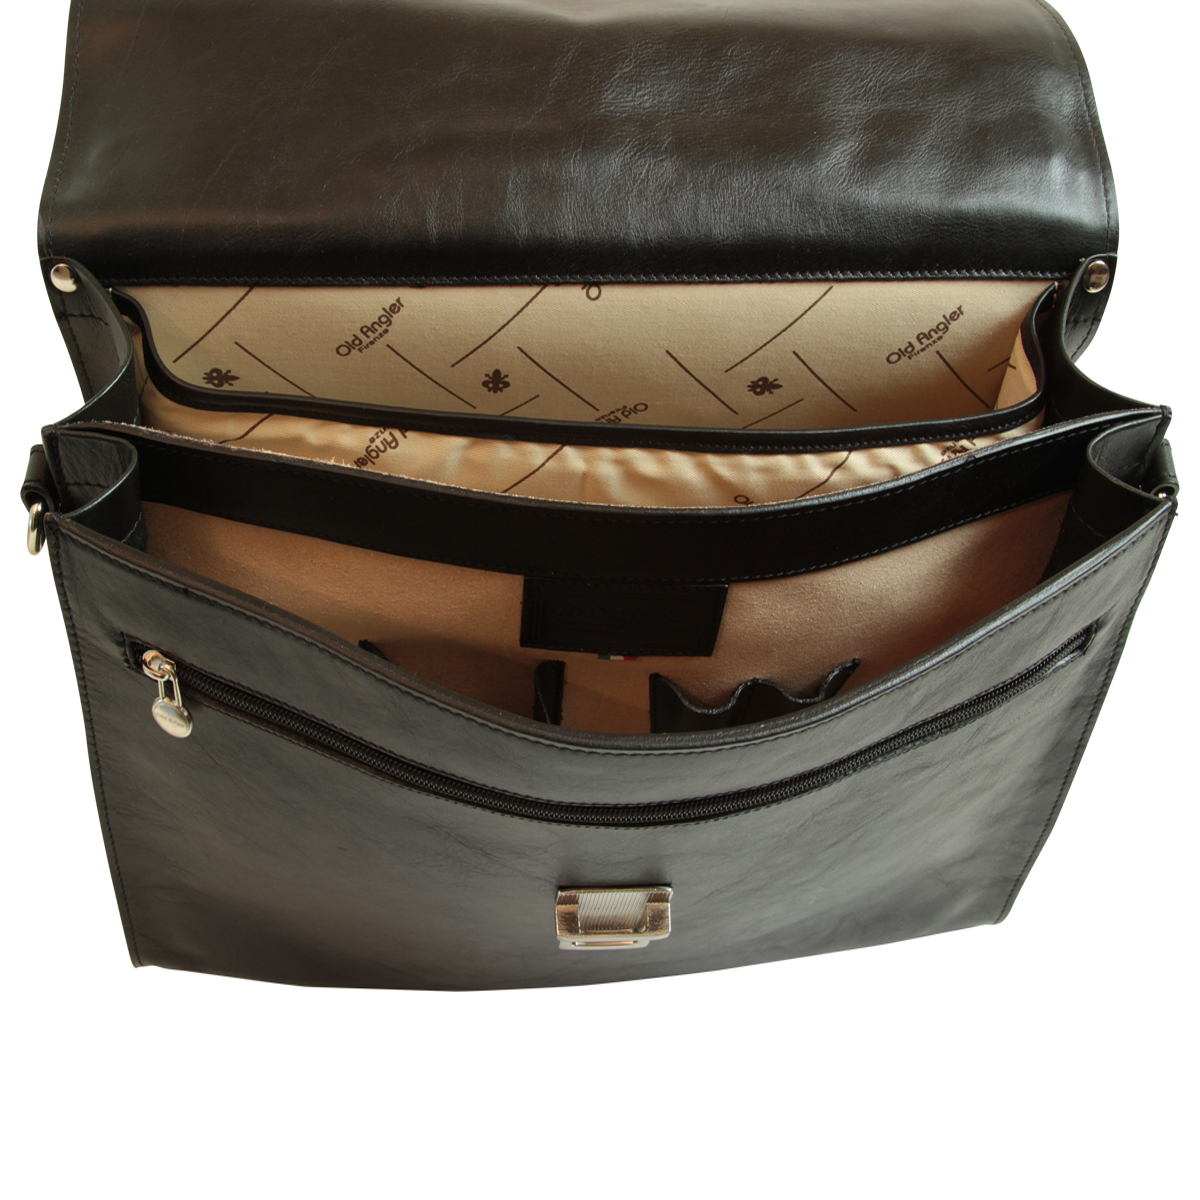 Leather Laptop Briefcase - Black | 052889NE | EURO | Old Angler Firenze